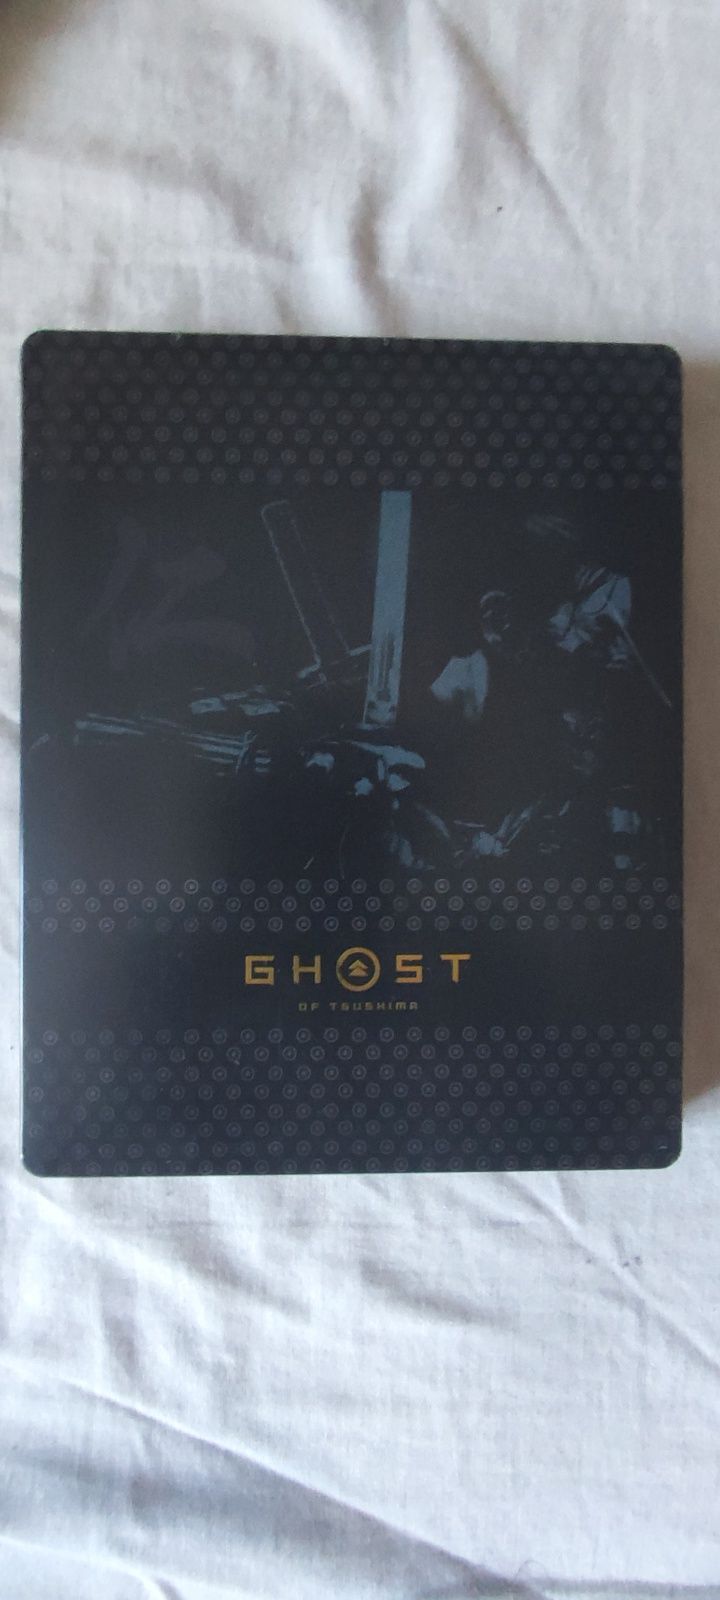 Ghost of tushima steelbook ps4